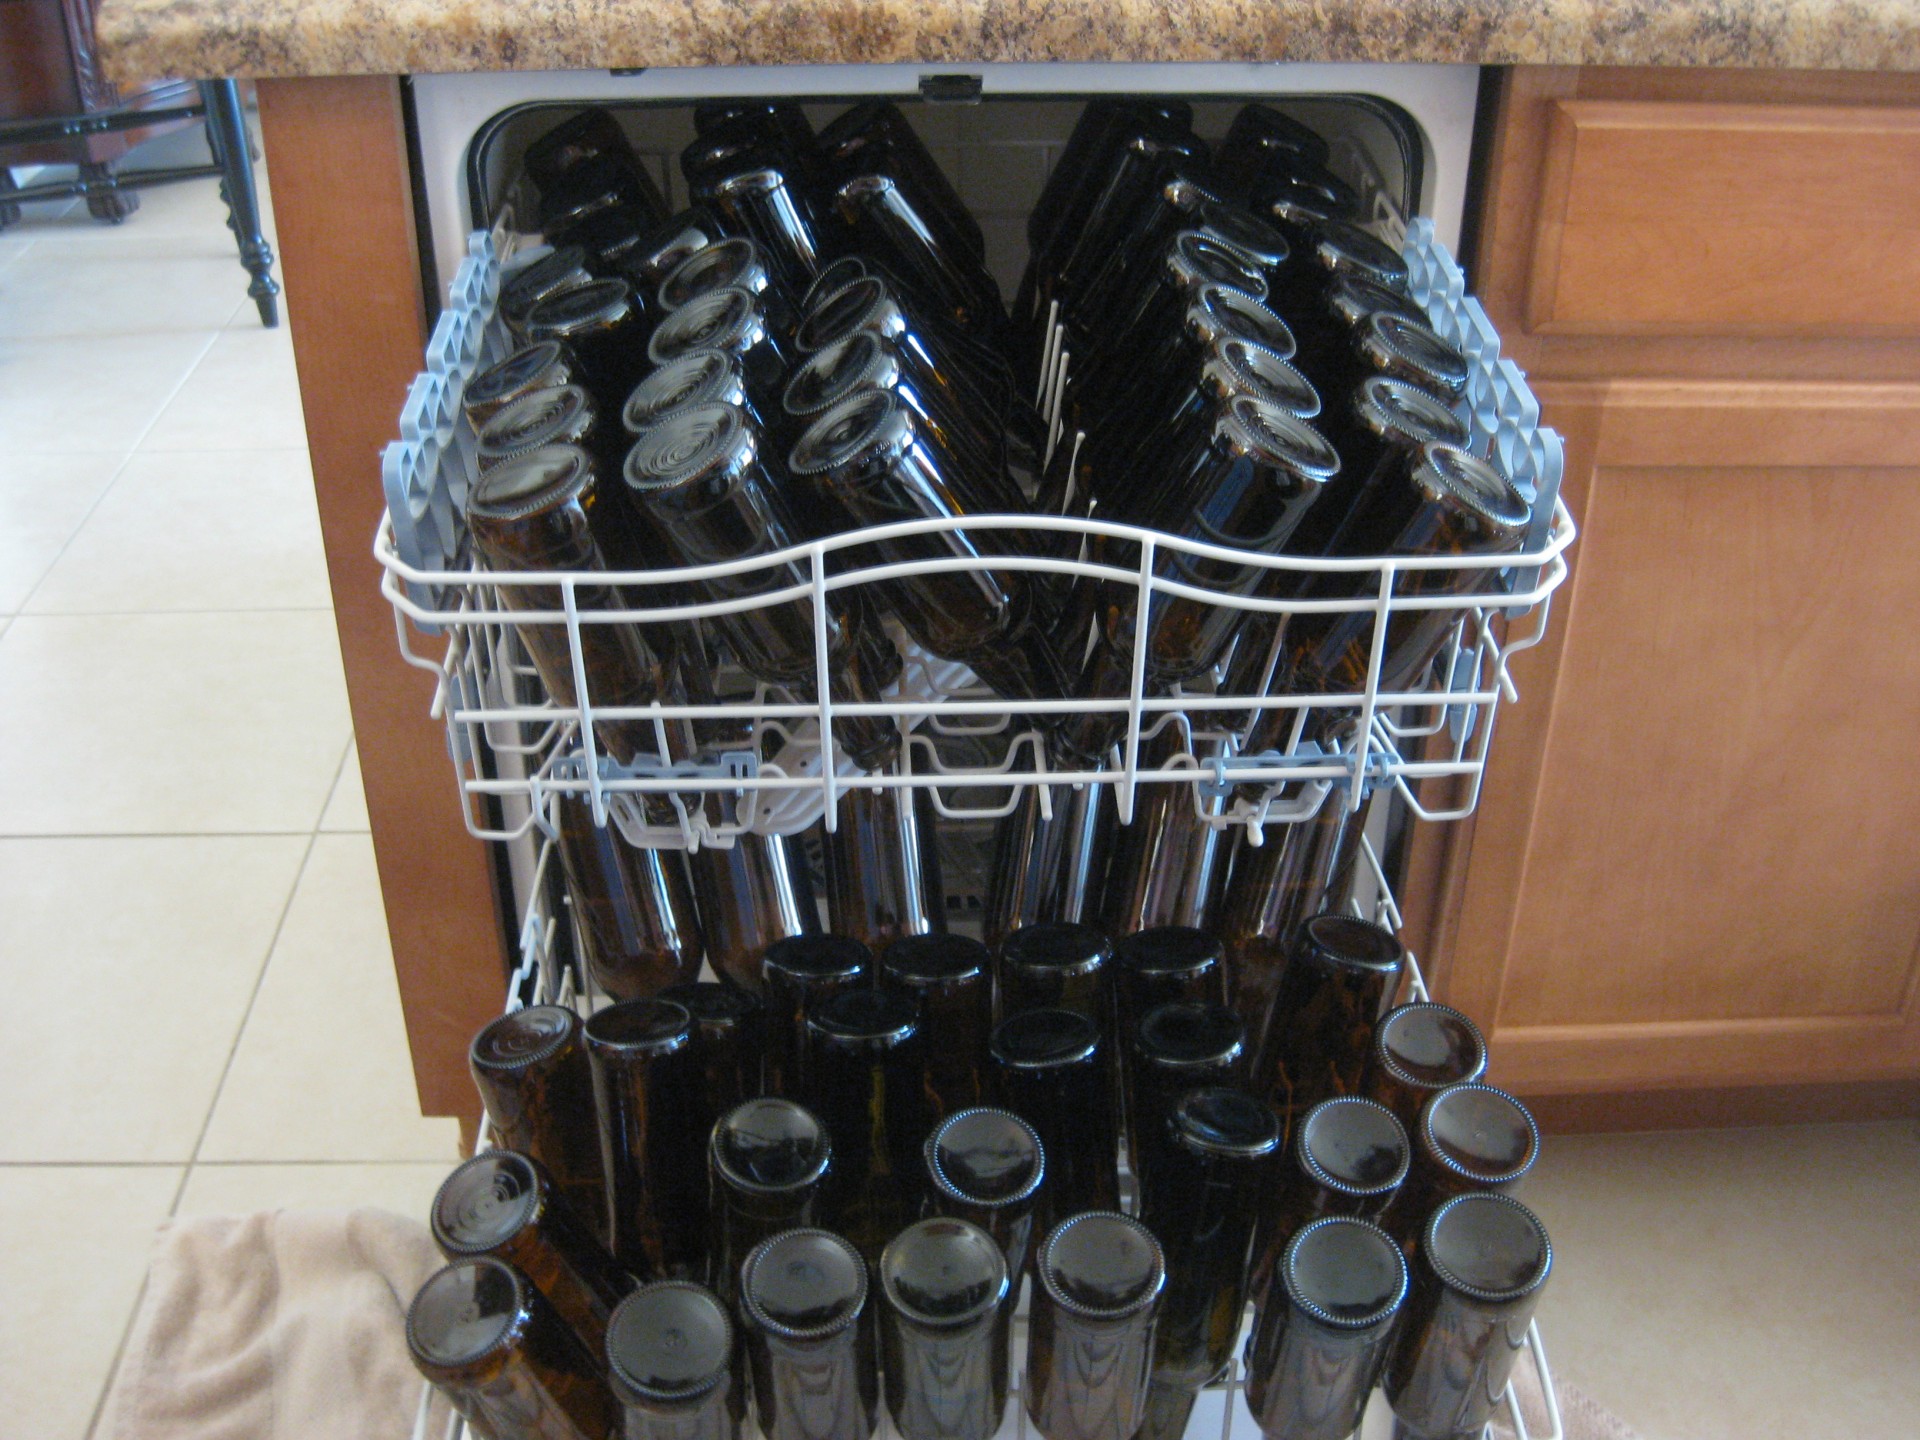 Dishwasher-as-a-Bottling-Tree.jpg